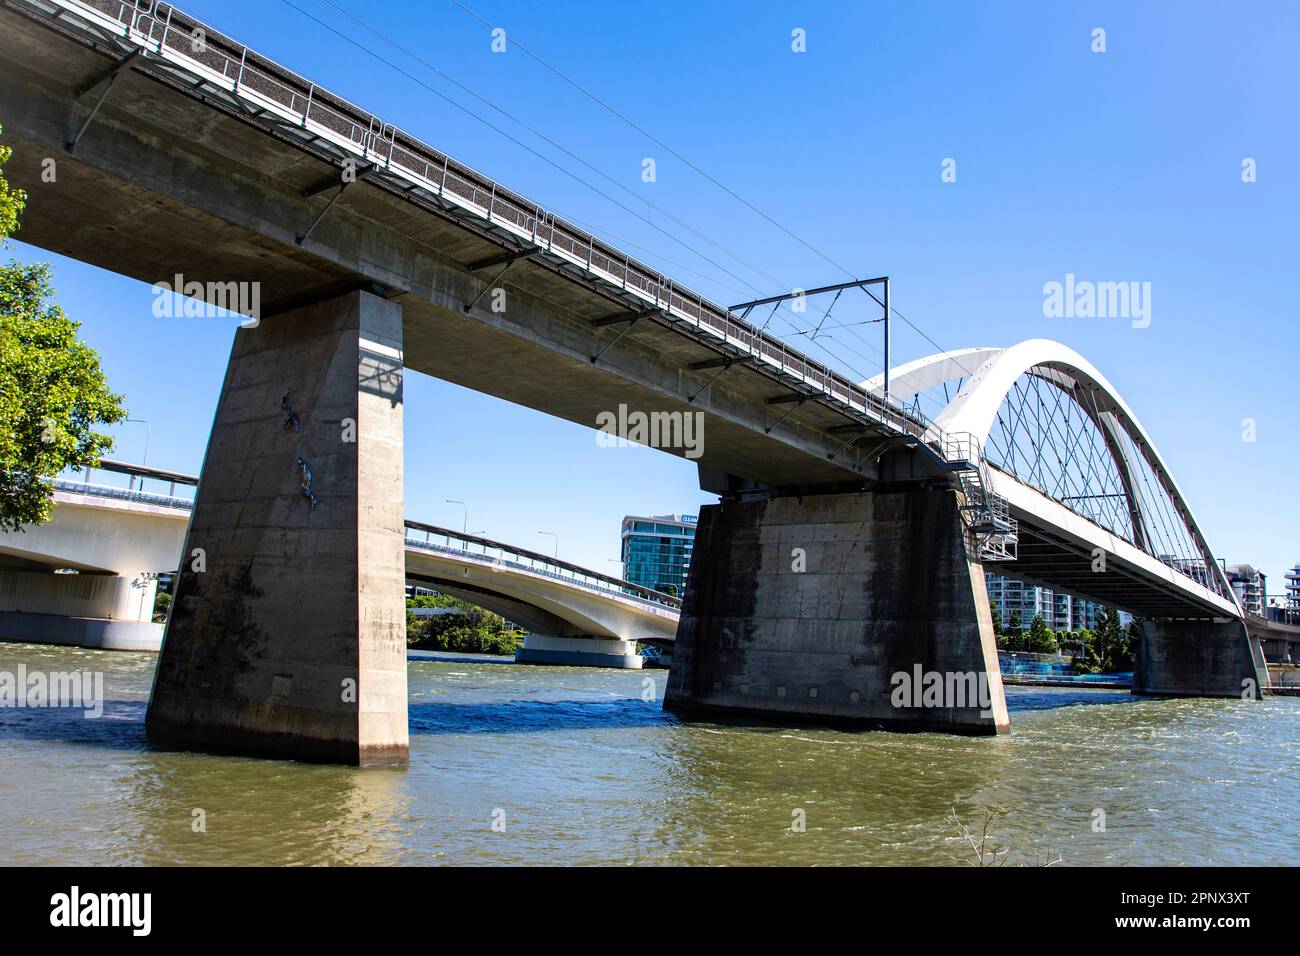 The Merivale Bridge is a double track railway bridge over the Brisbane River opened in November 1978. Stock Photo